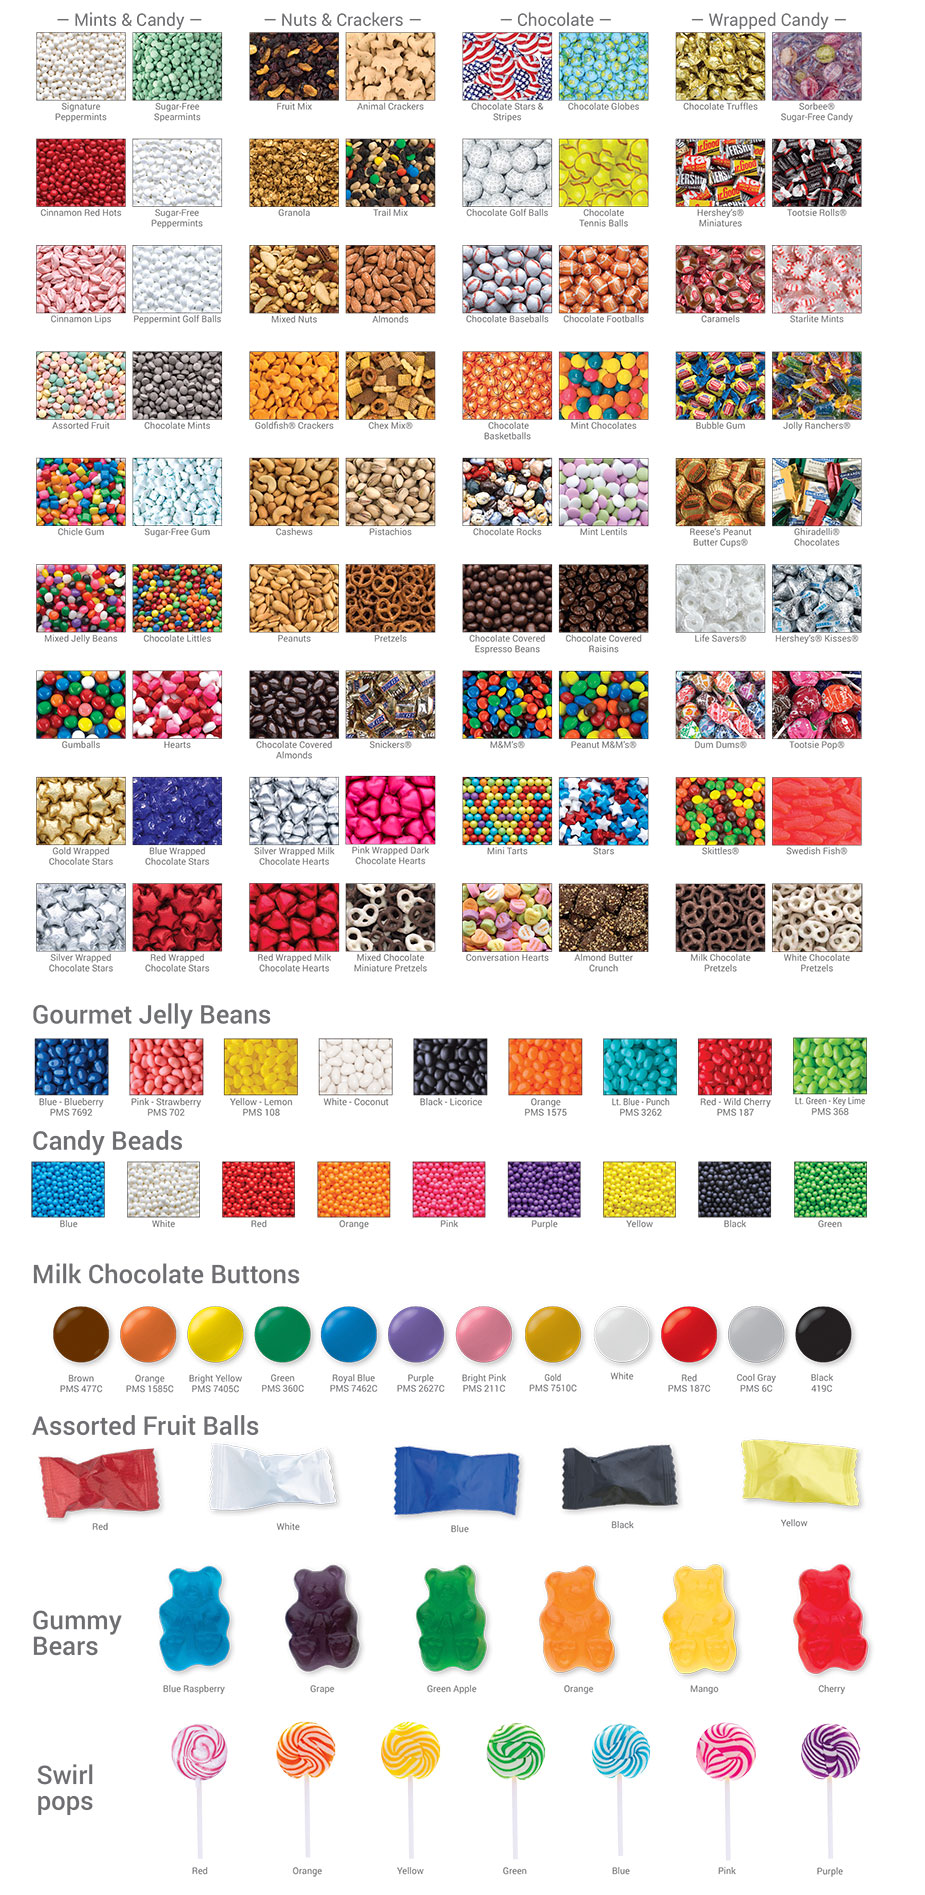 Standard Flavors & Fillings | Gourmet Jelly Beans | Candy Beads | Milk Chocolate Buttons | Assorted Fruit Balls | Gummy Bears | Swirl Pops